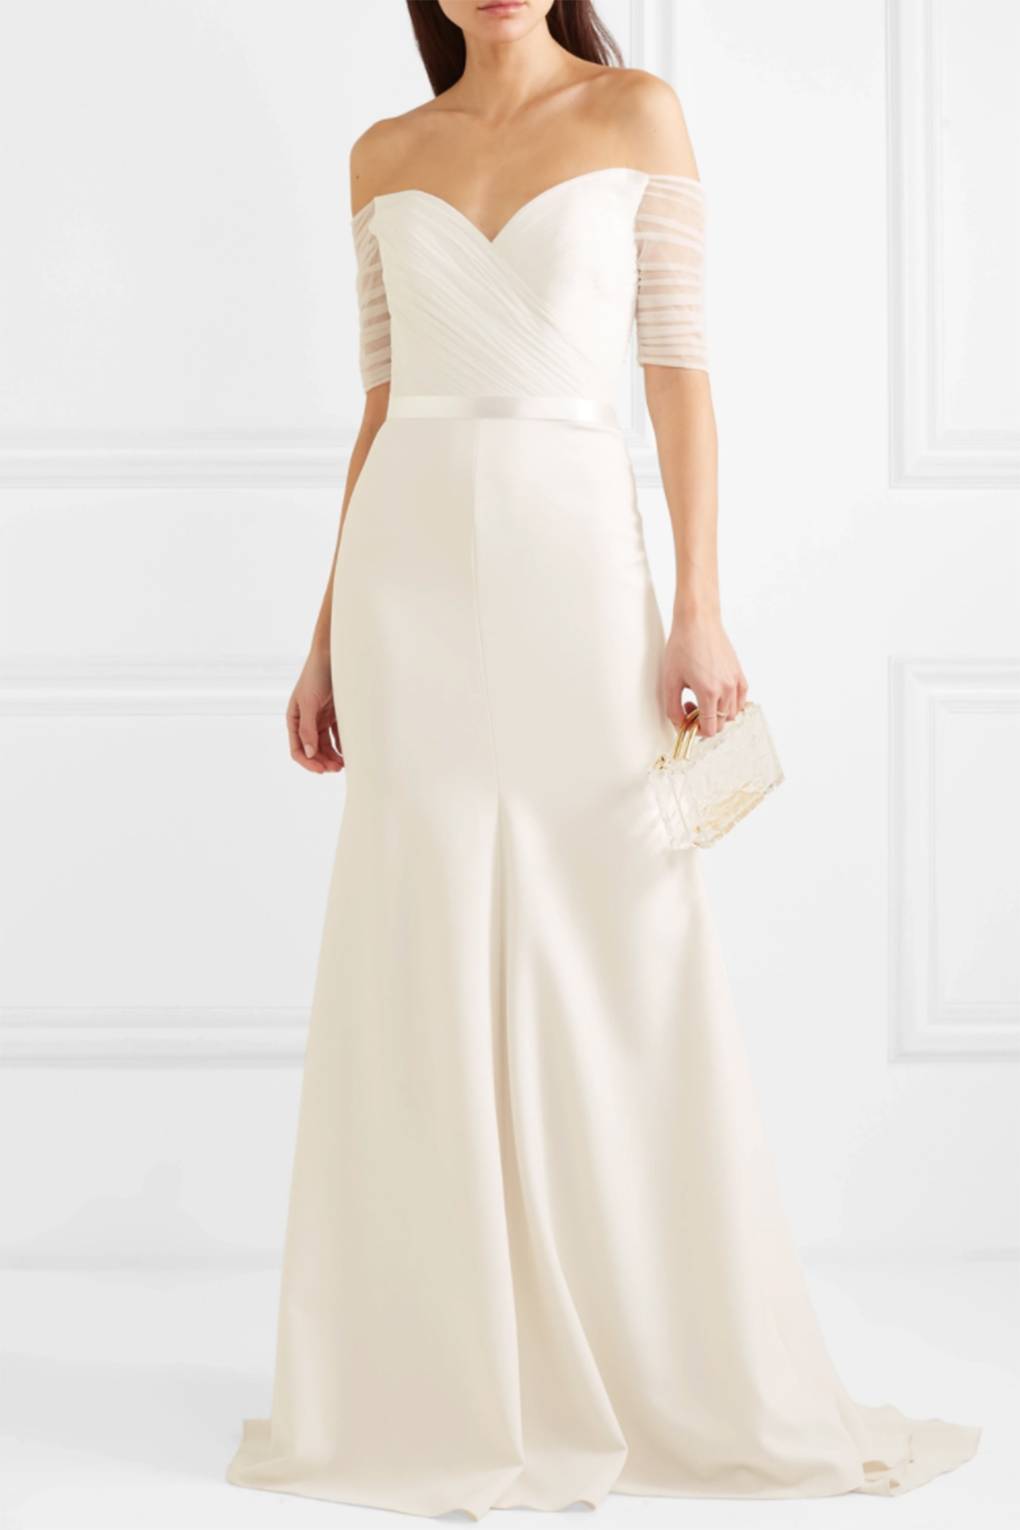 The Best Bardot Wedding Dresses To Buy Now Glamour Uk 4768